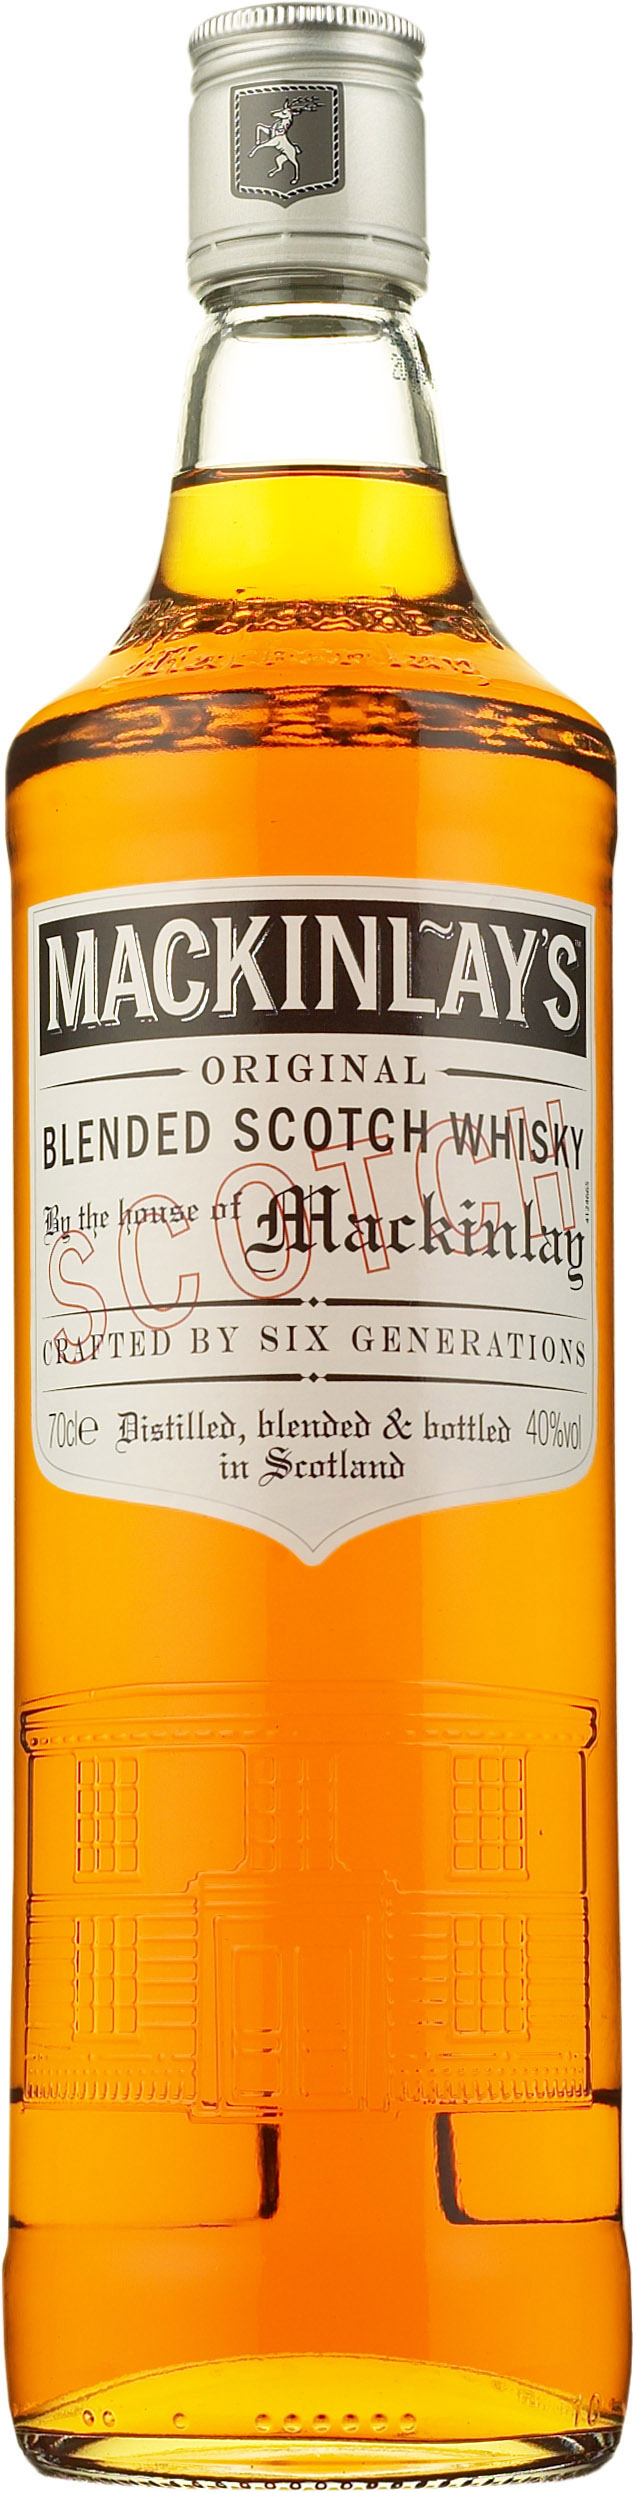 Mackinlay’s Original Scotch Whisky